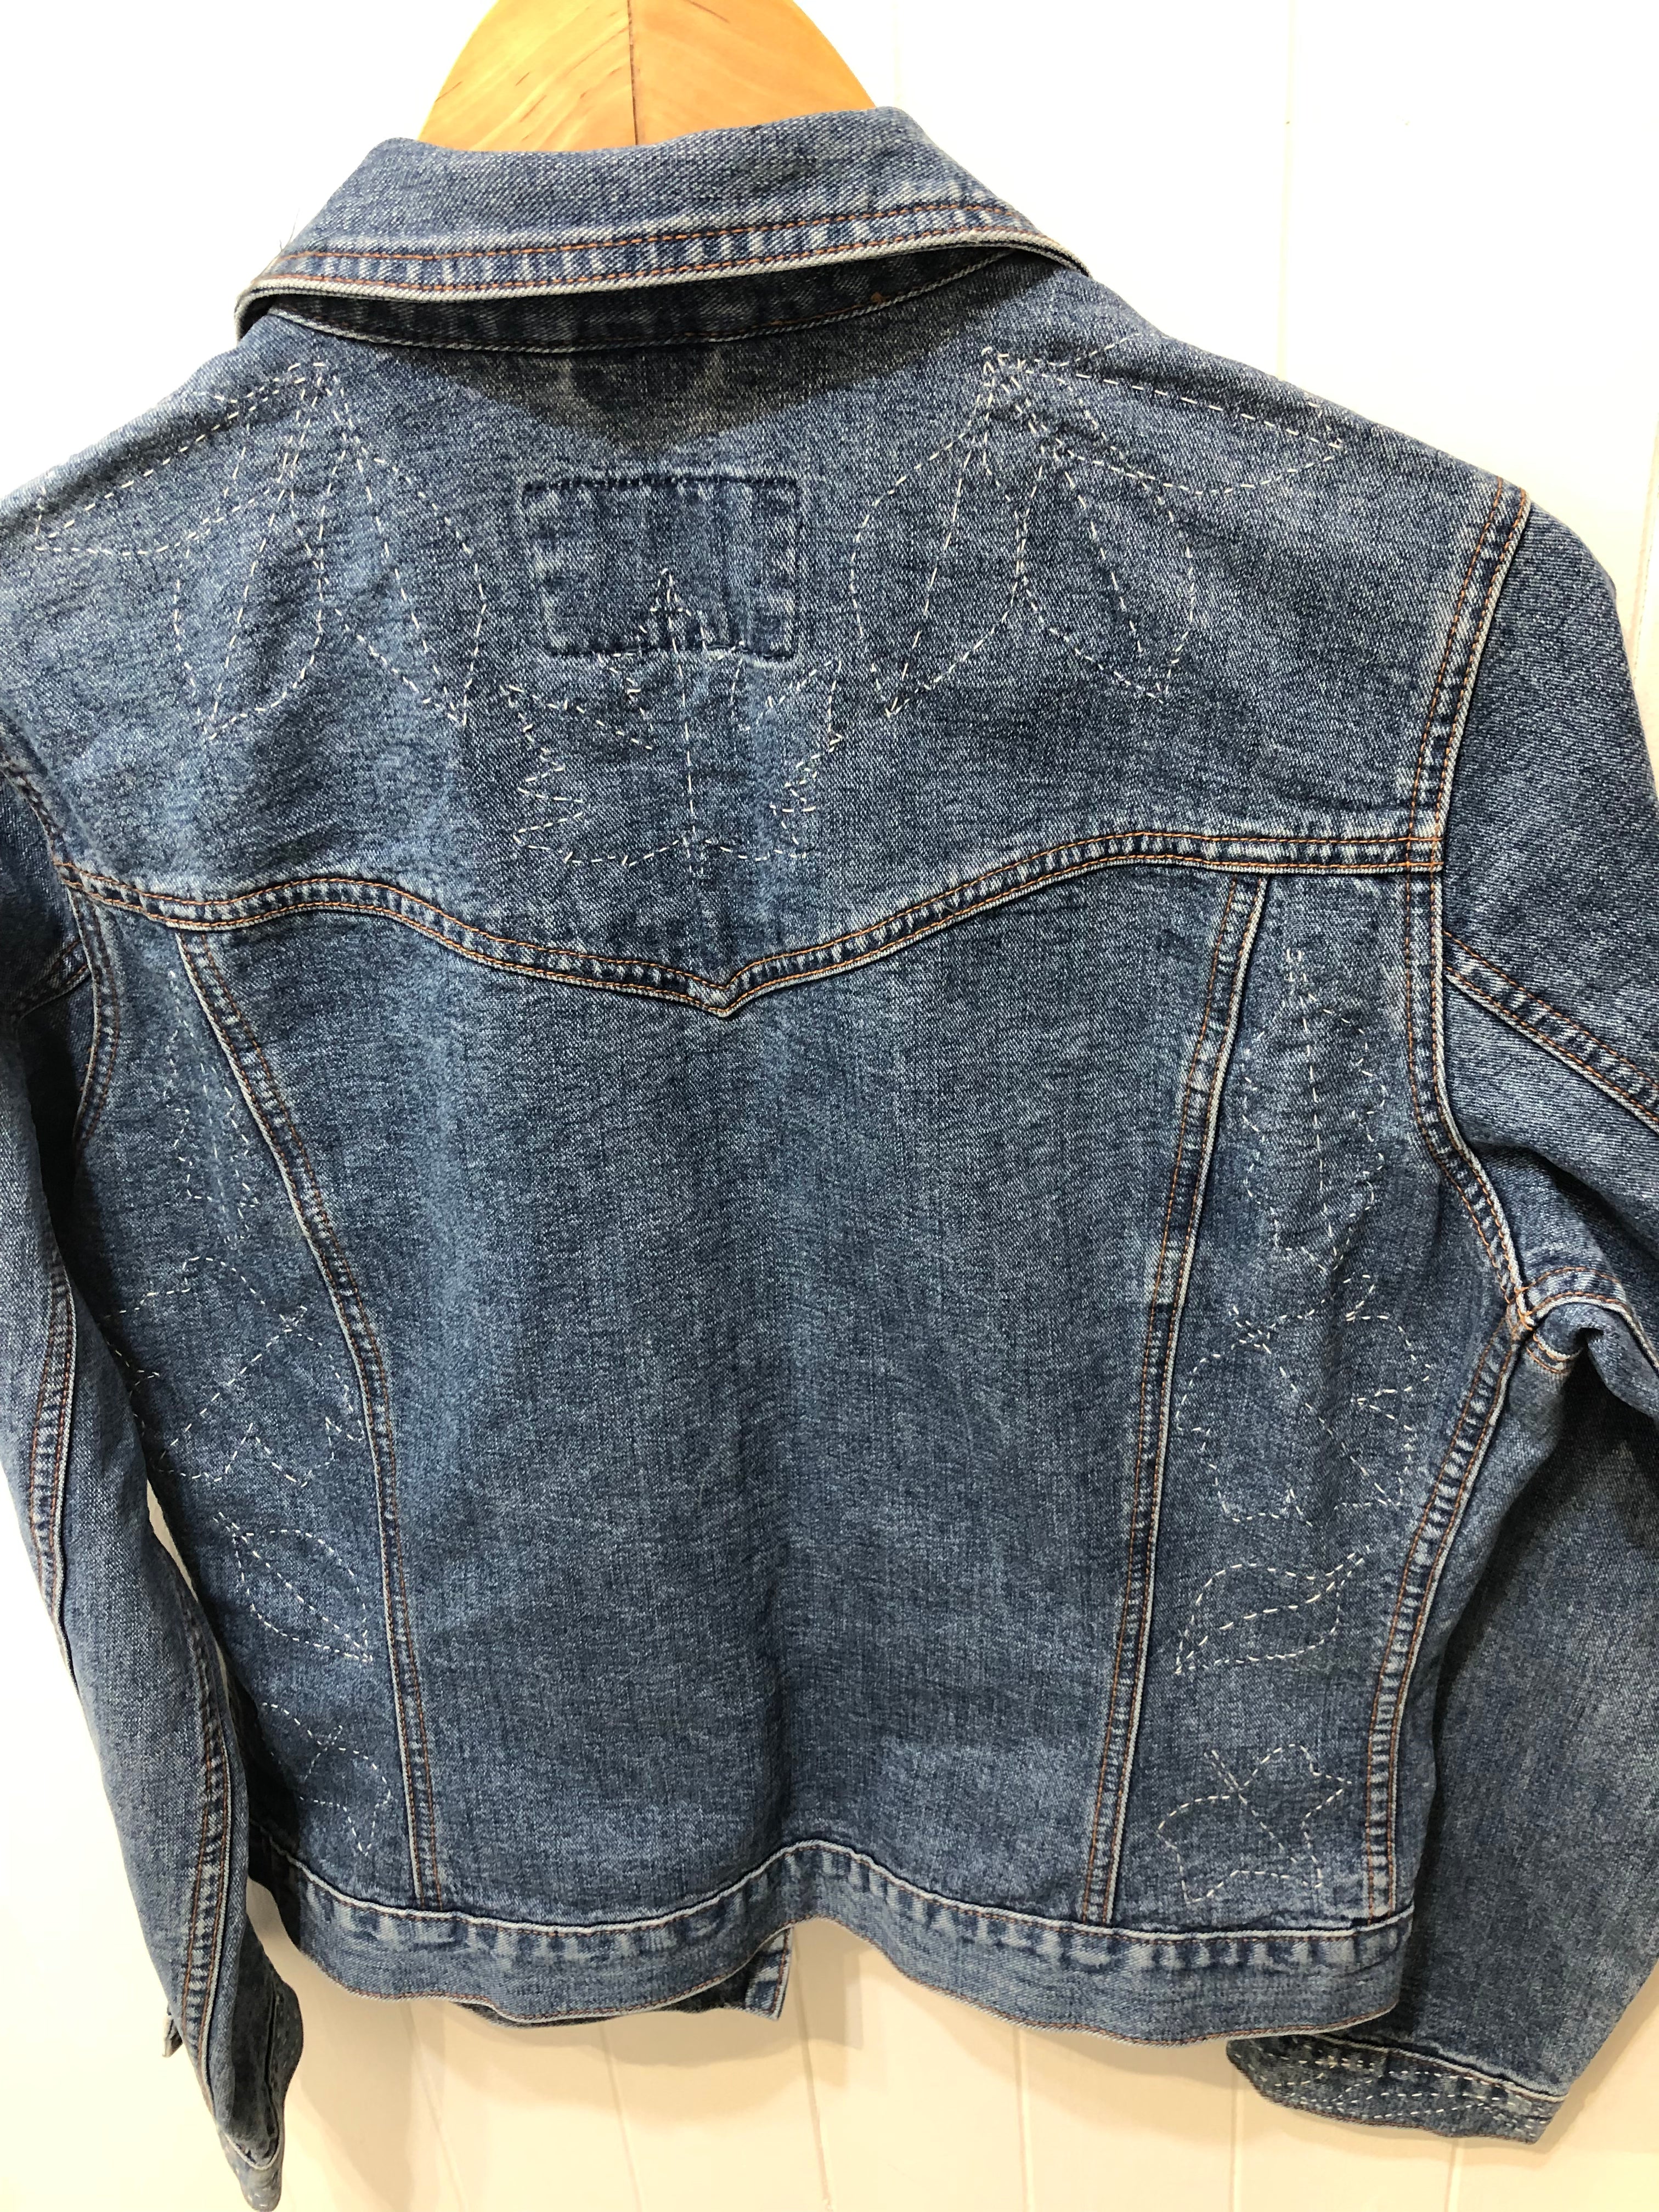 Re-Styled Denim Jacket by Trish (stitched Leafs)